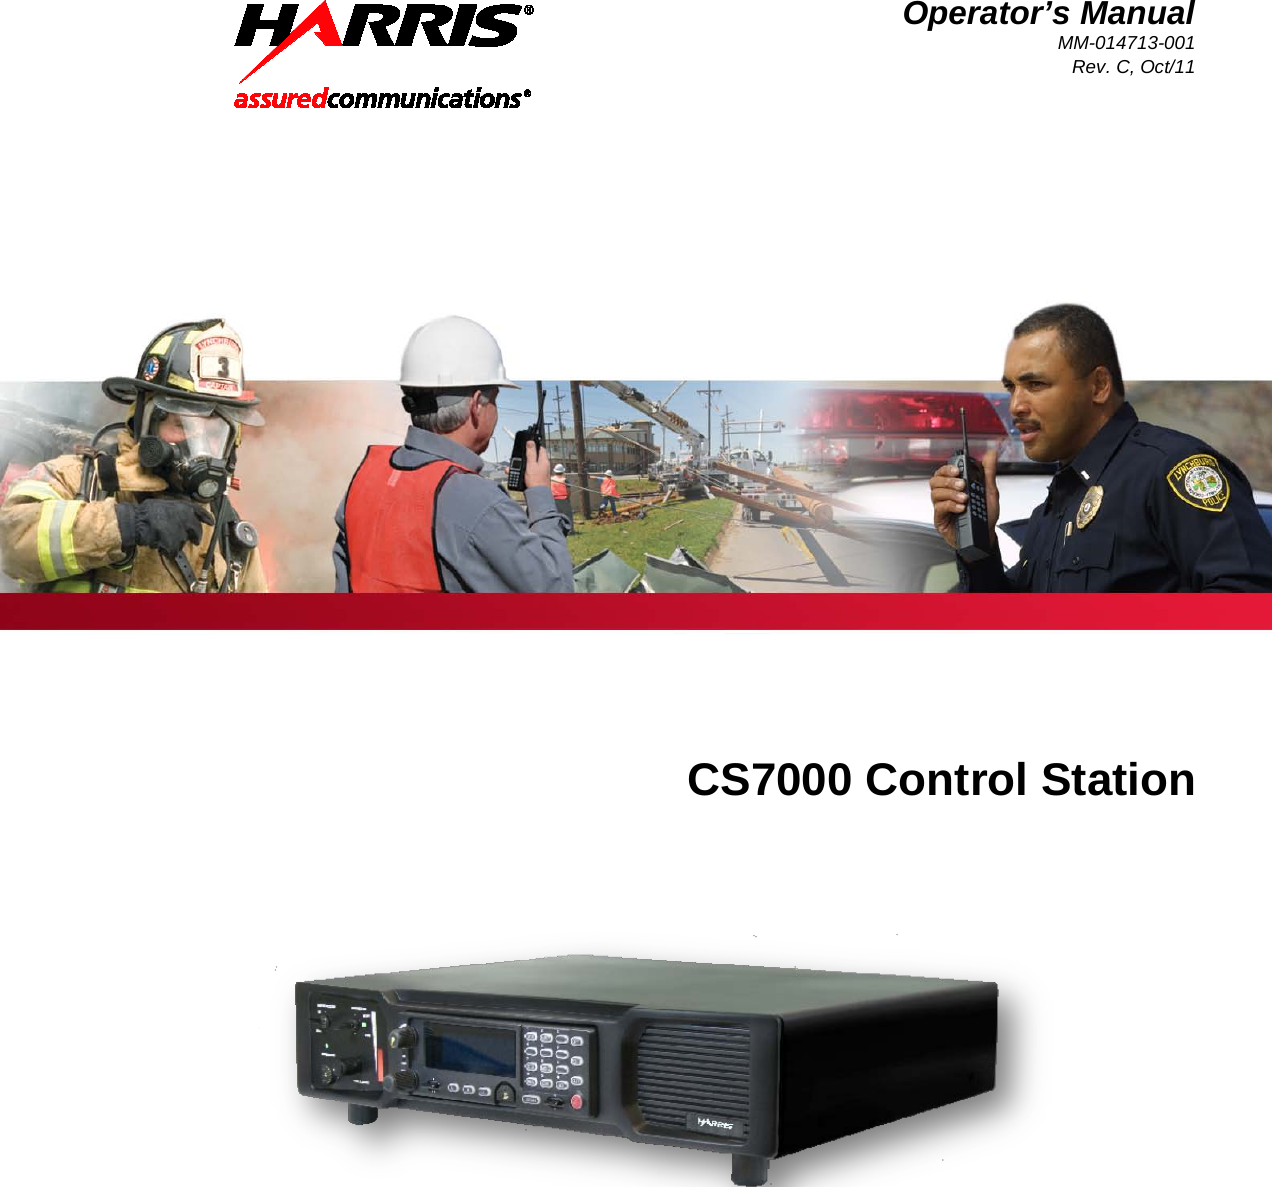  Operator’s Manual MM-014713-001 Rev. C, Oct/11    CS7000 Control Station  